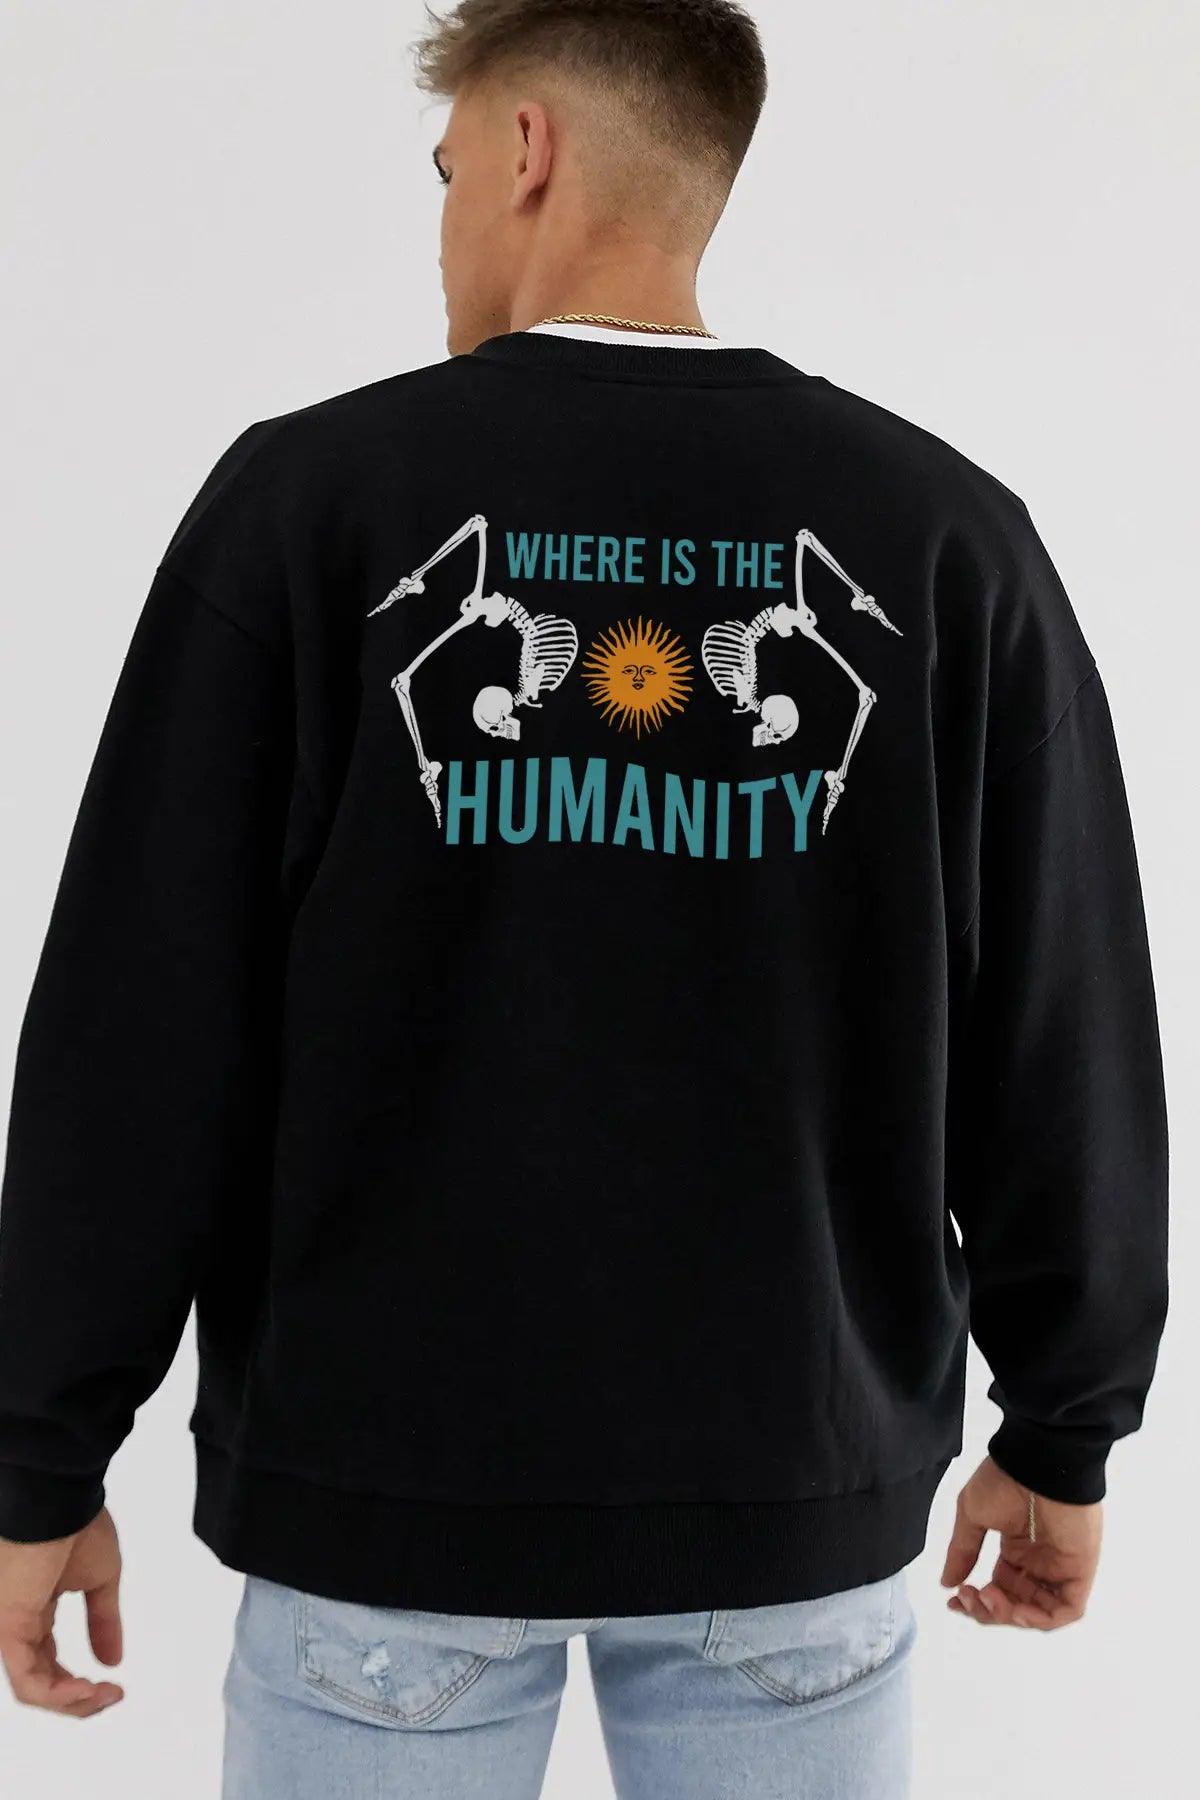 Humanity Oversize Erkek Sweatshirt - PΛSΛGE